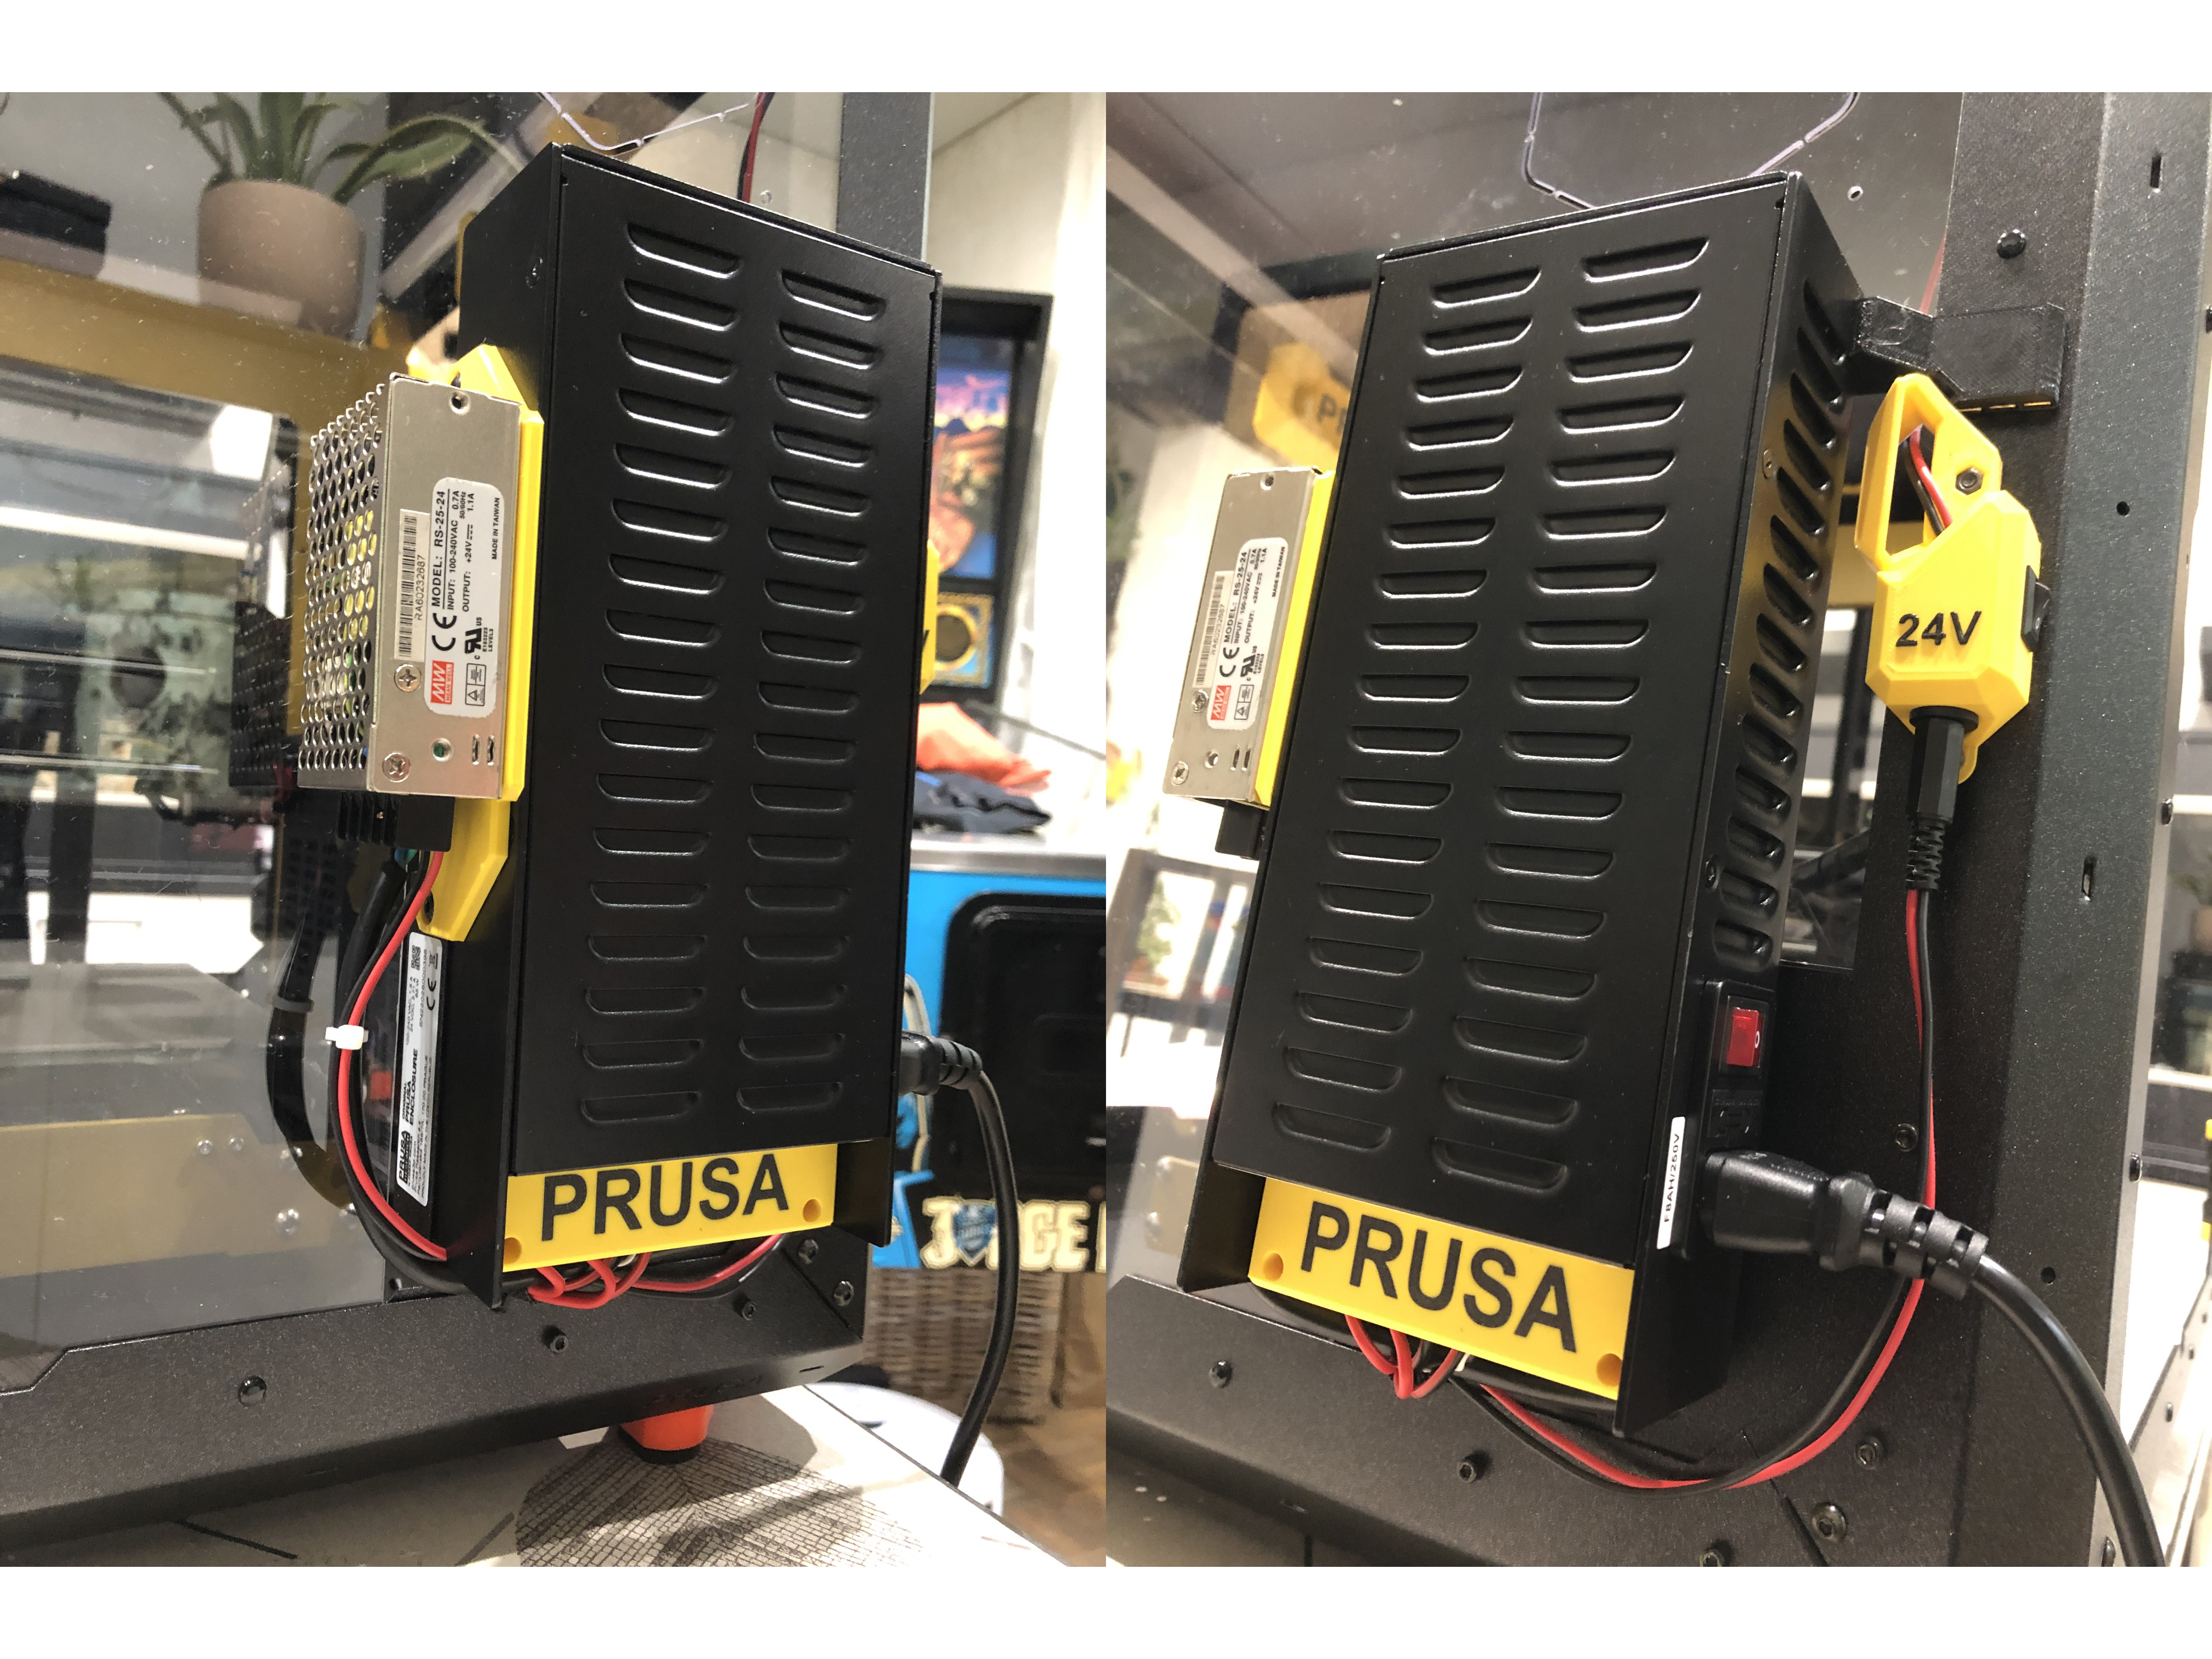 PSU Cover with cable swap "2 colors" - Original Prusa Enclosure